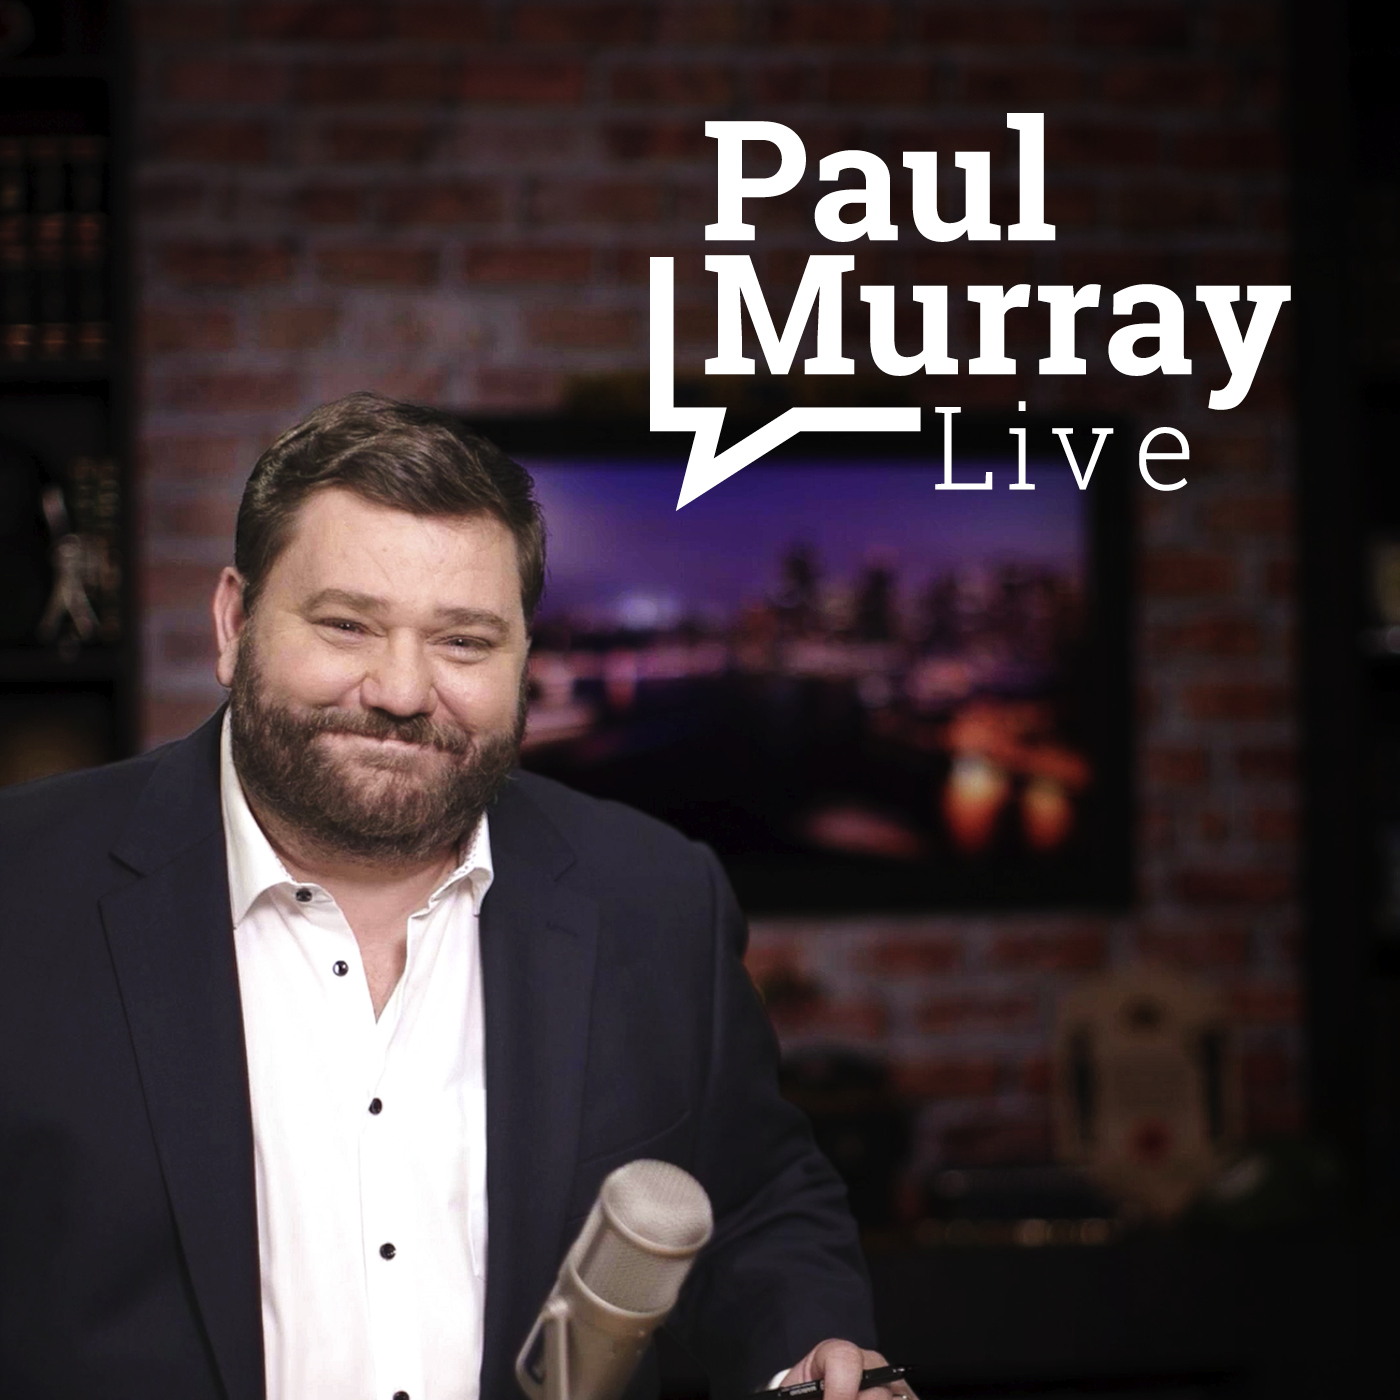 Paul Murray Live, Wednesday 2 June